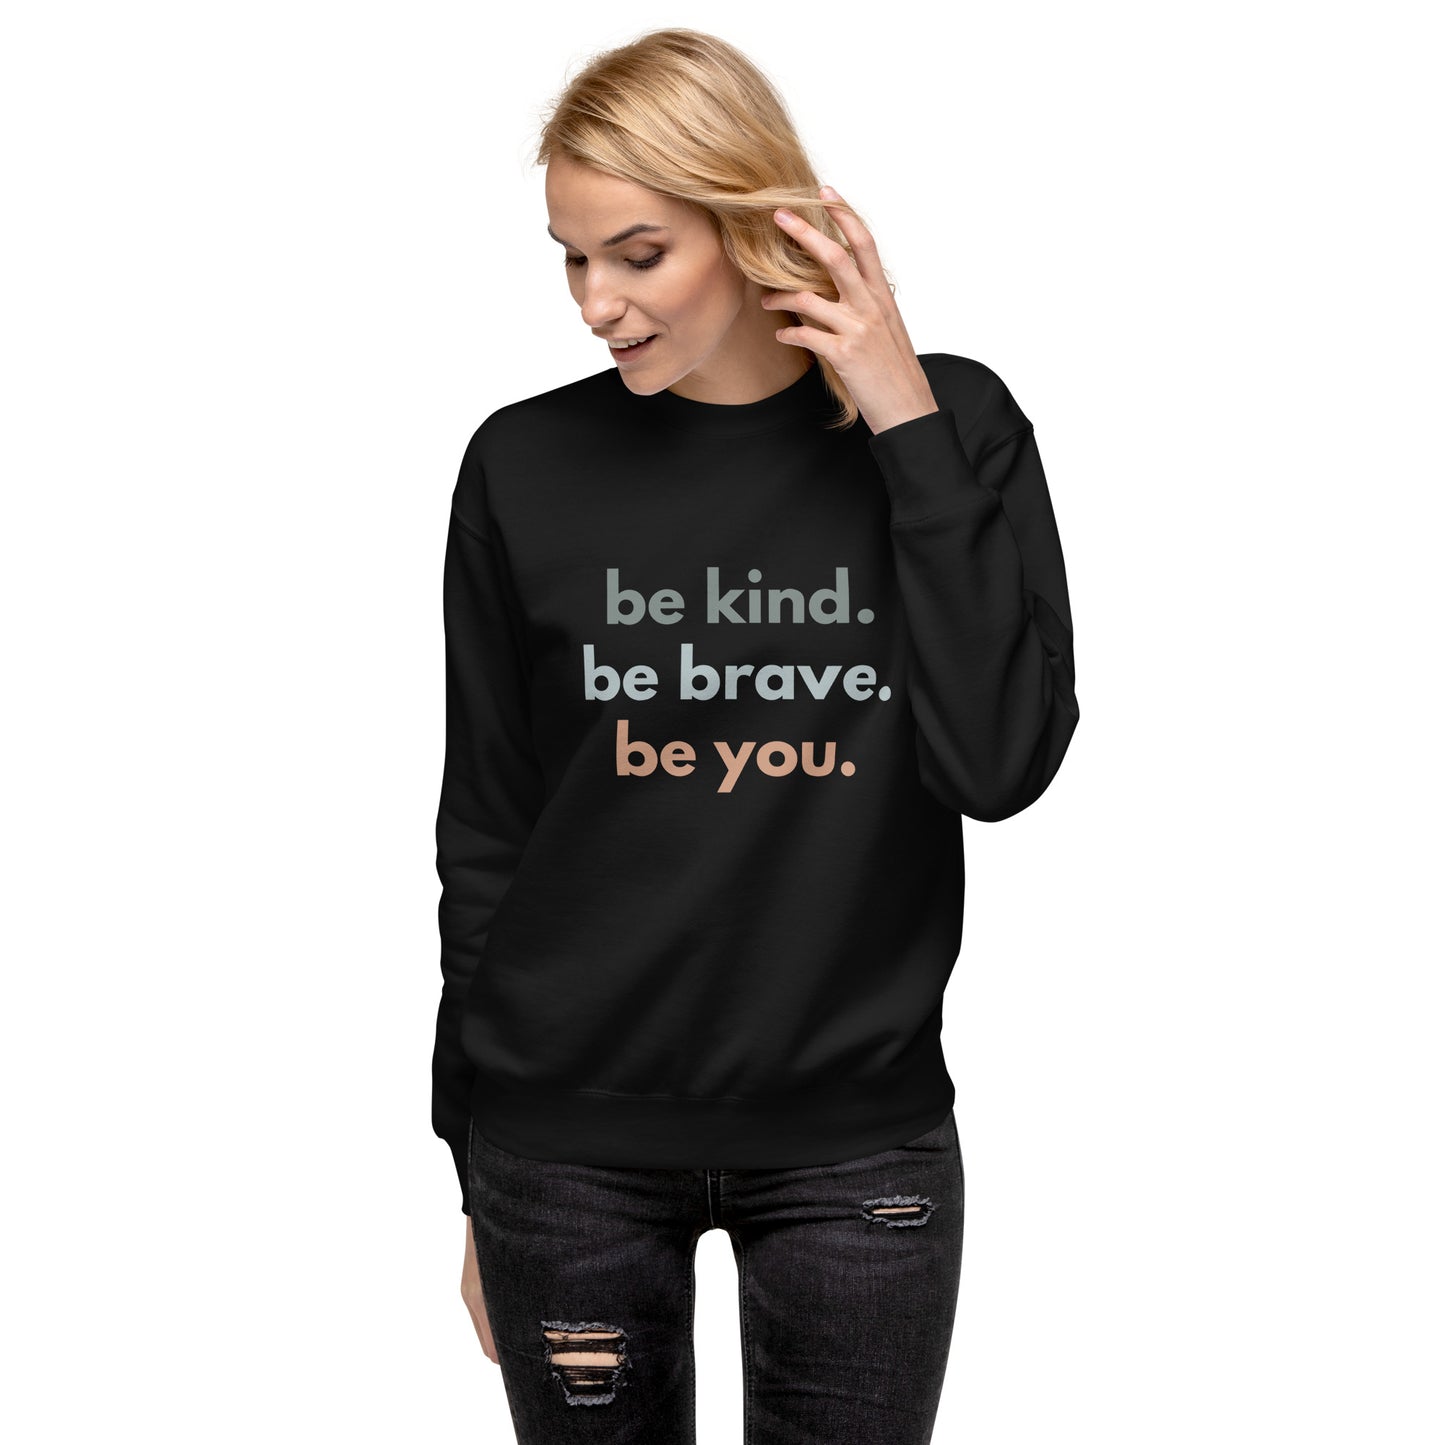 Unisex Premium Sweatshirt - be brave. be kind. be you.